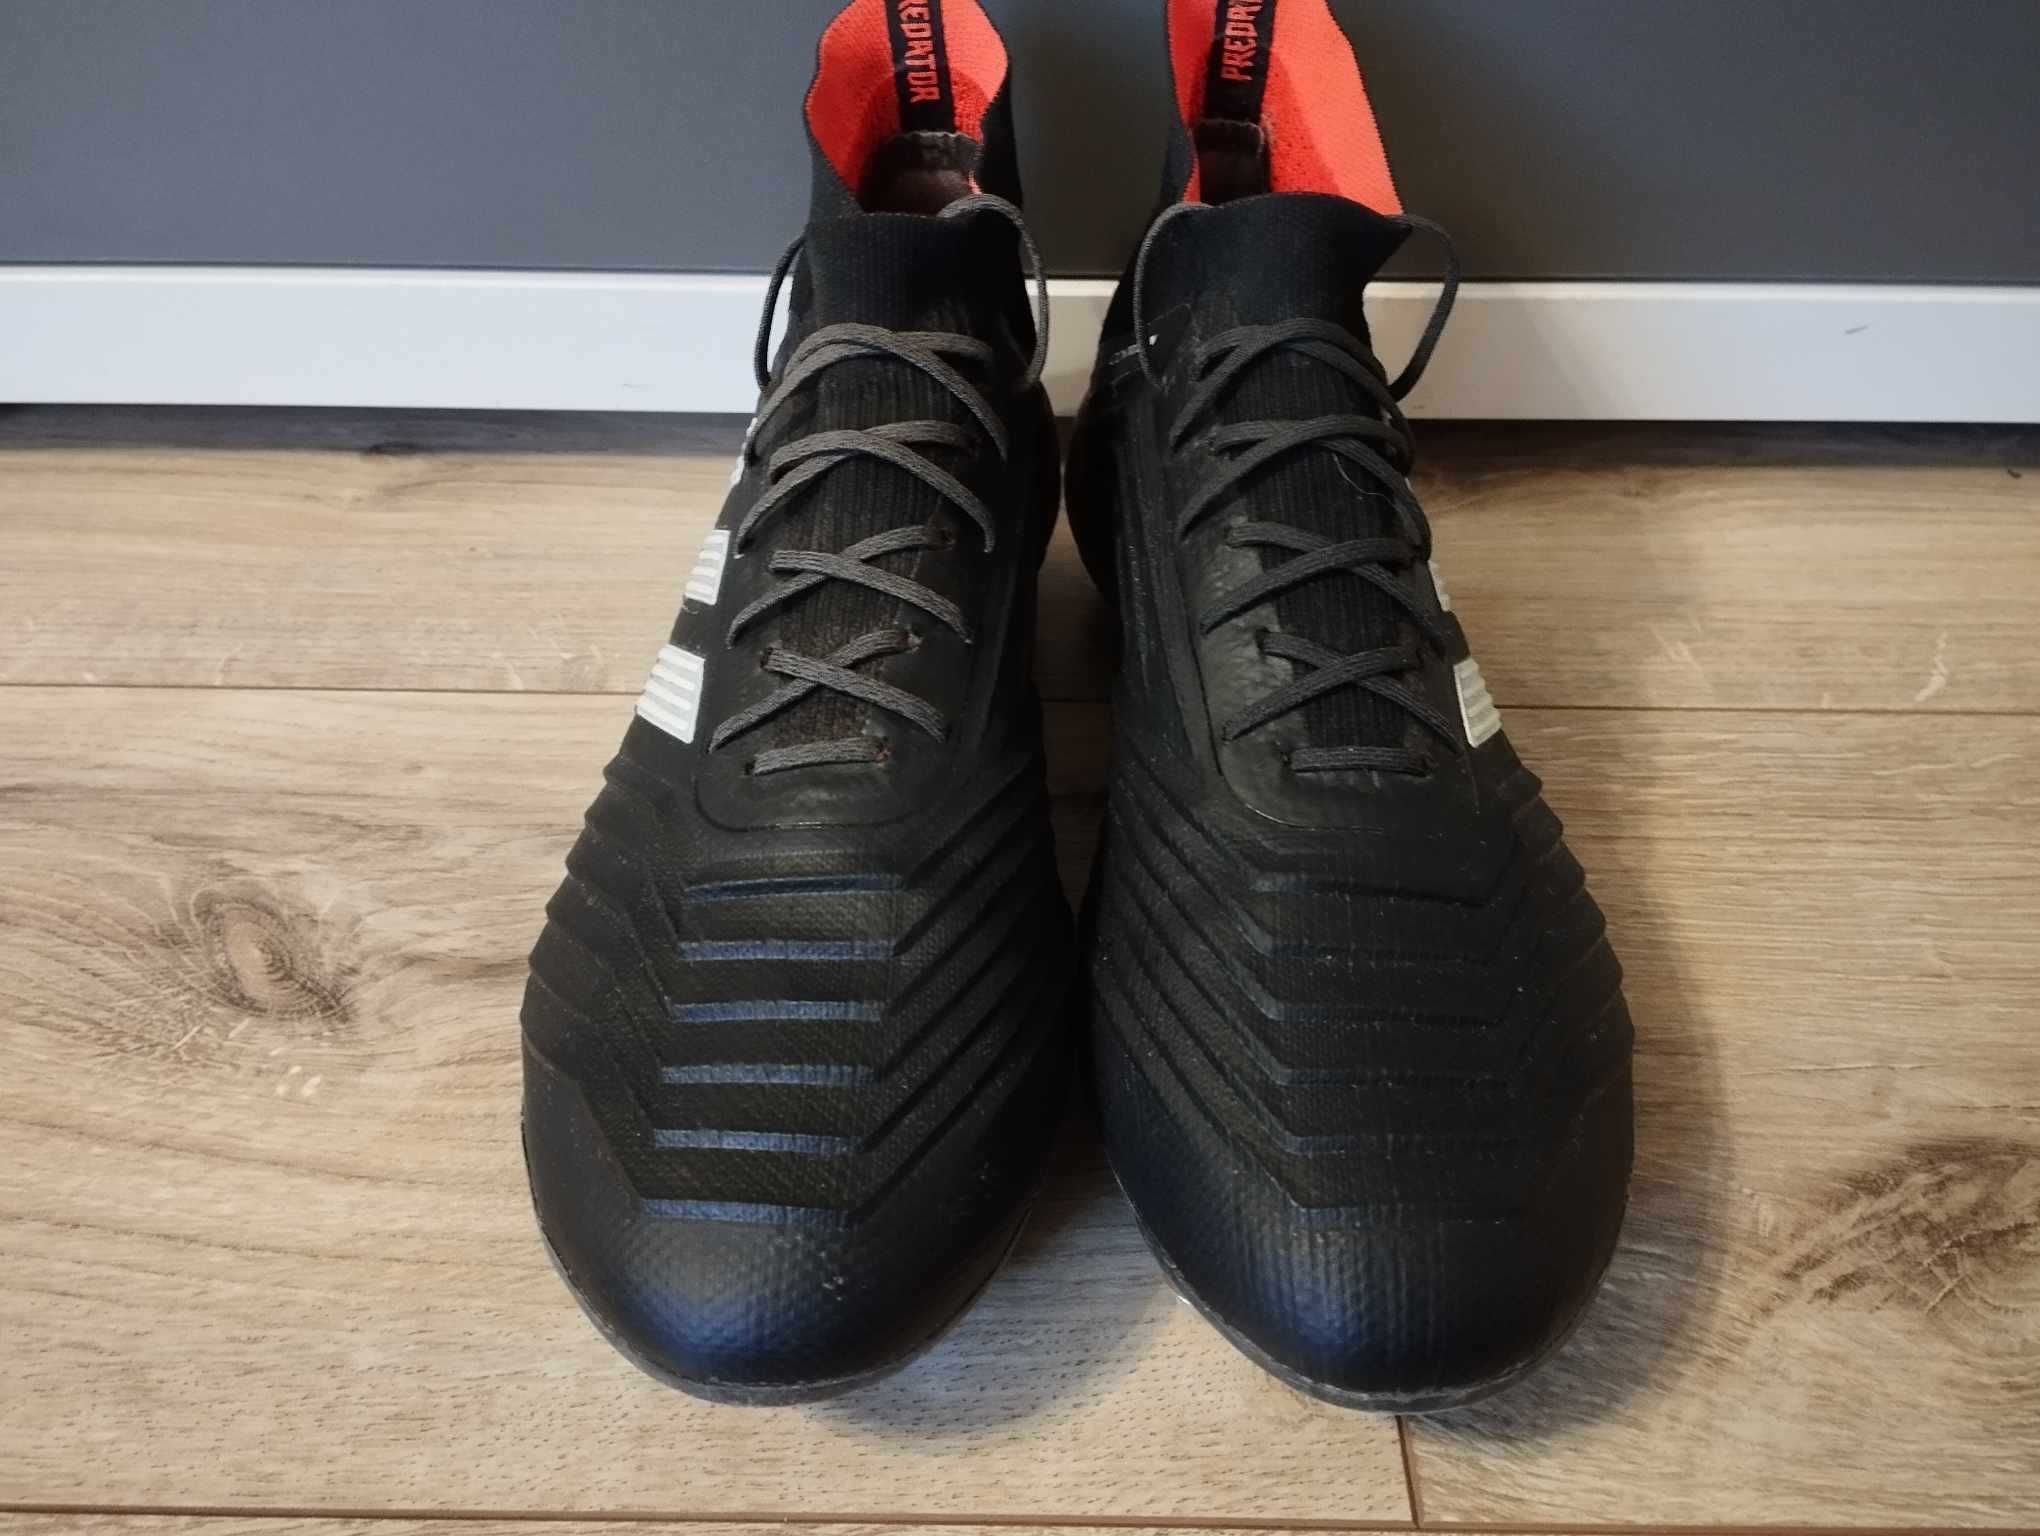 Adidas Predator 18.1 SG buty piłkarskie CP 9260 size 41 i 1/3